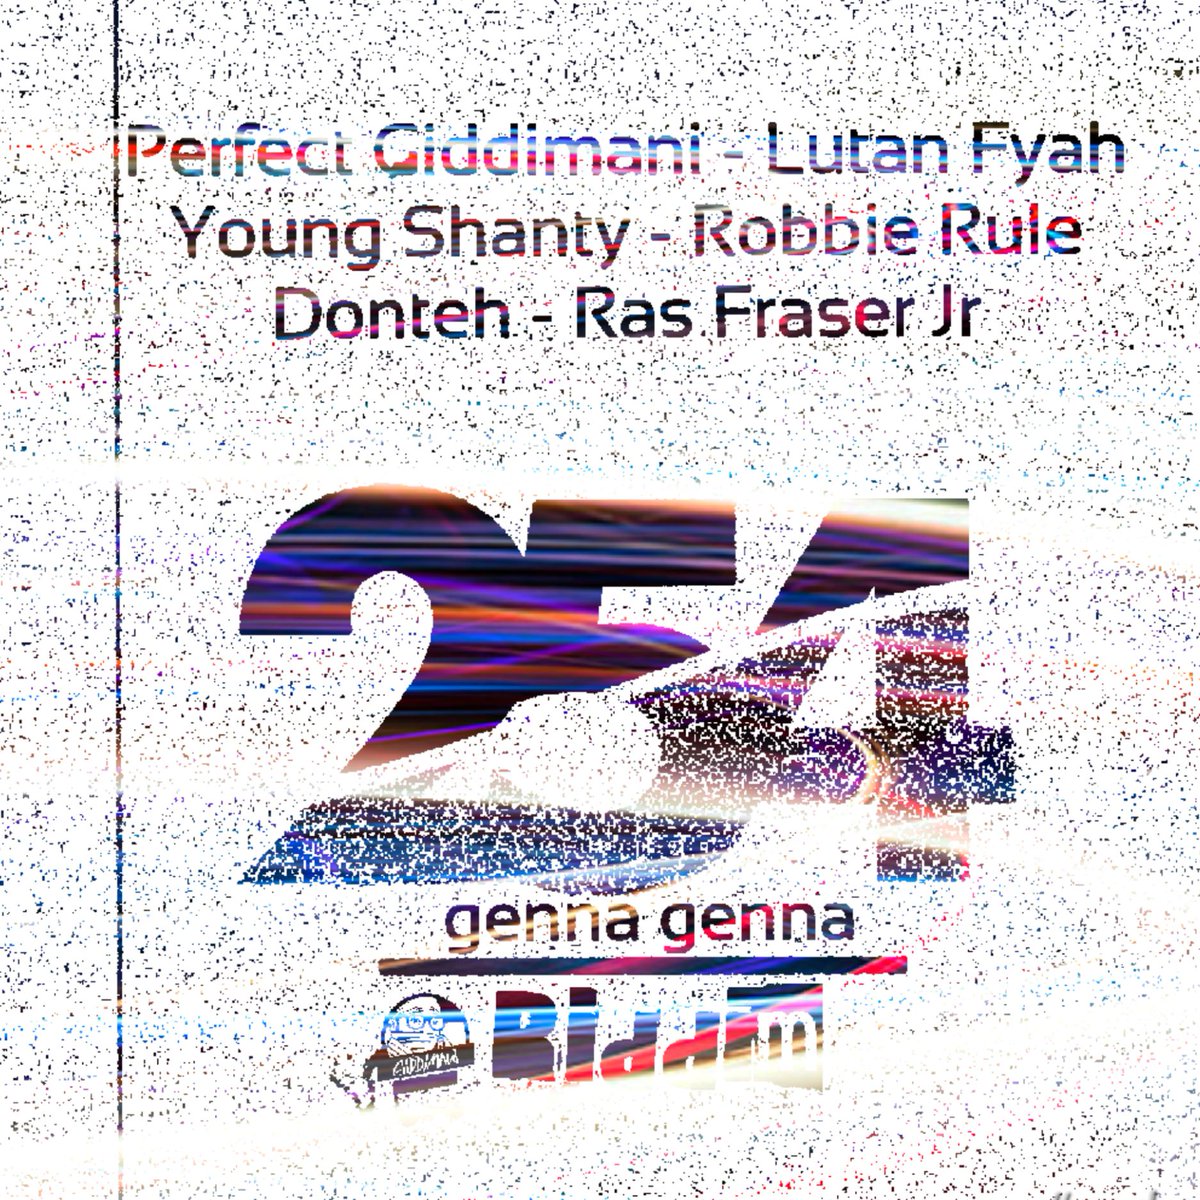 This July*23rd....🖐️🖐️🖐️
Giddimani Records Presents!
THE '254 GENNA GENNA RIDDIM' 
#variousartist #july #newriddim #instores.